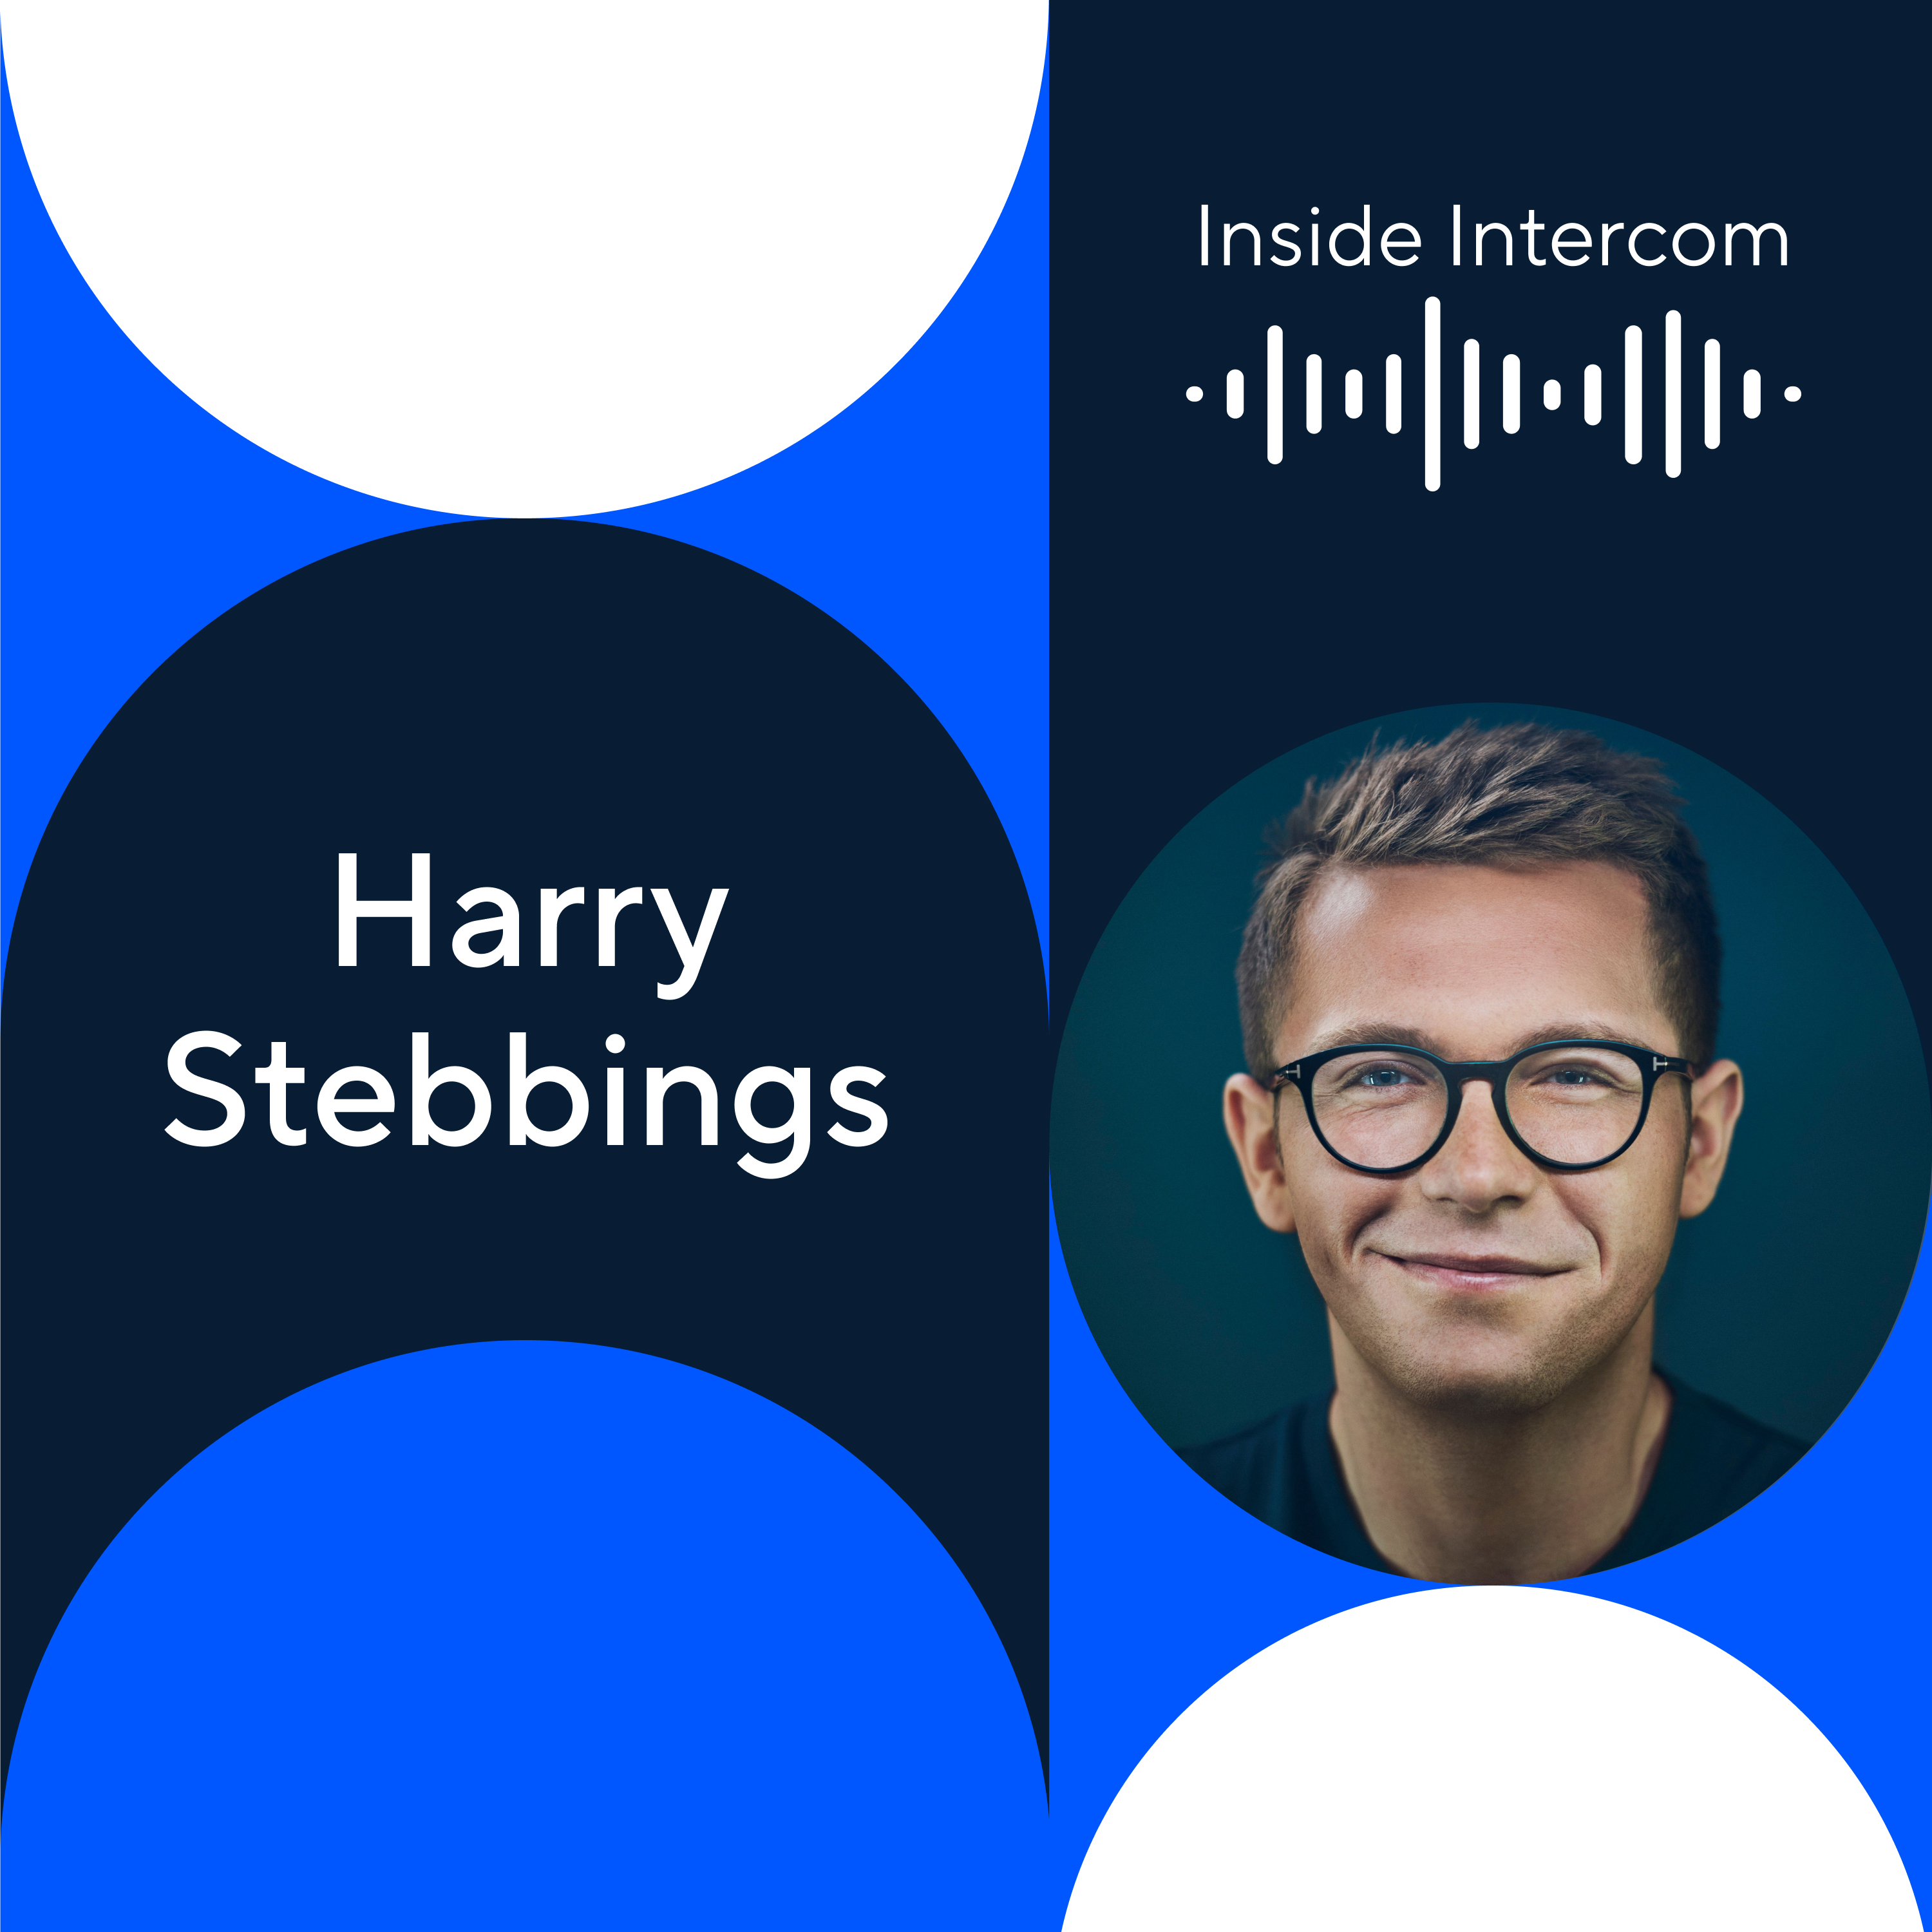 Venture capitalist Harry Stebbings on getting into venture